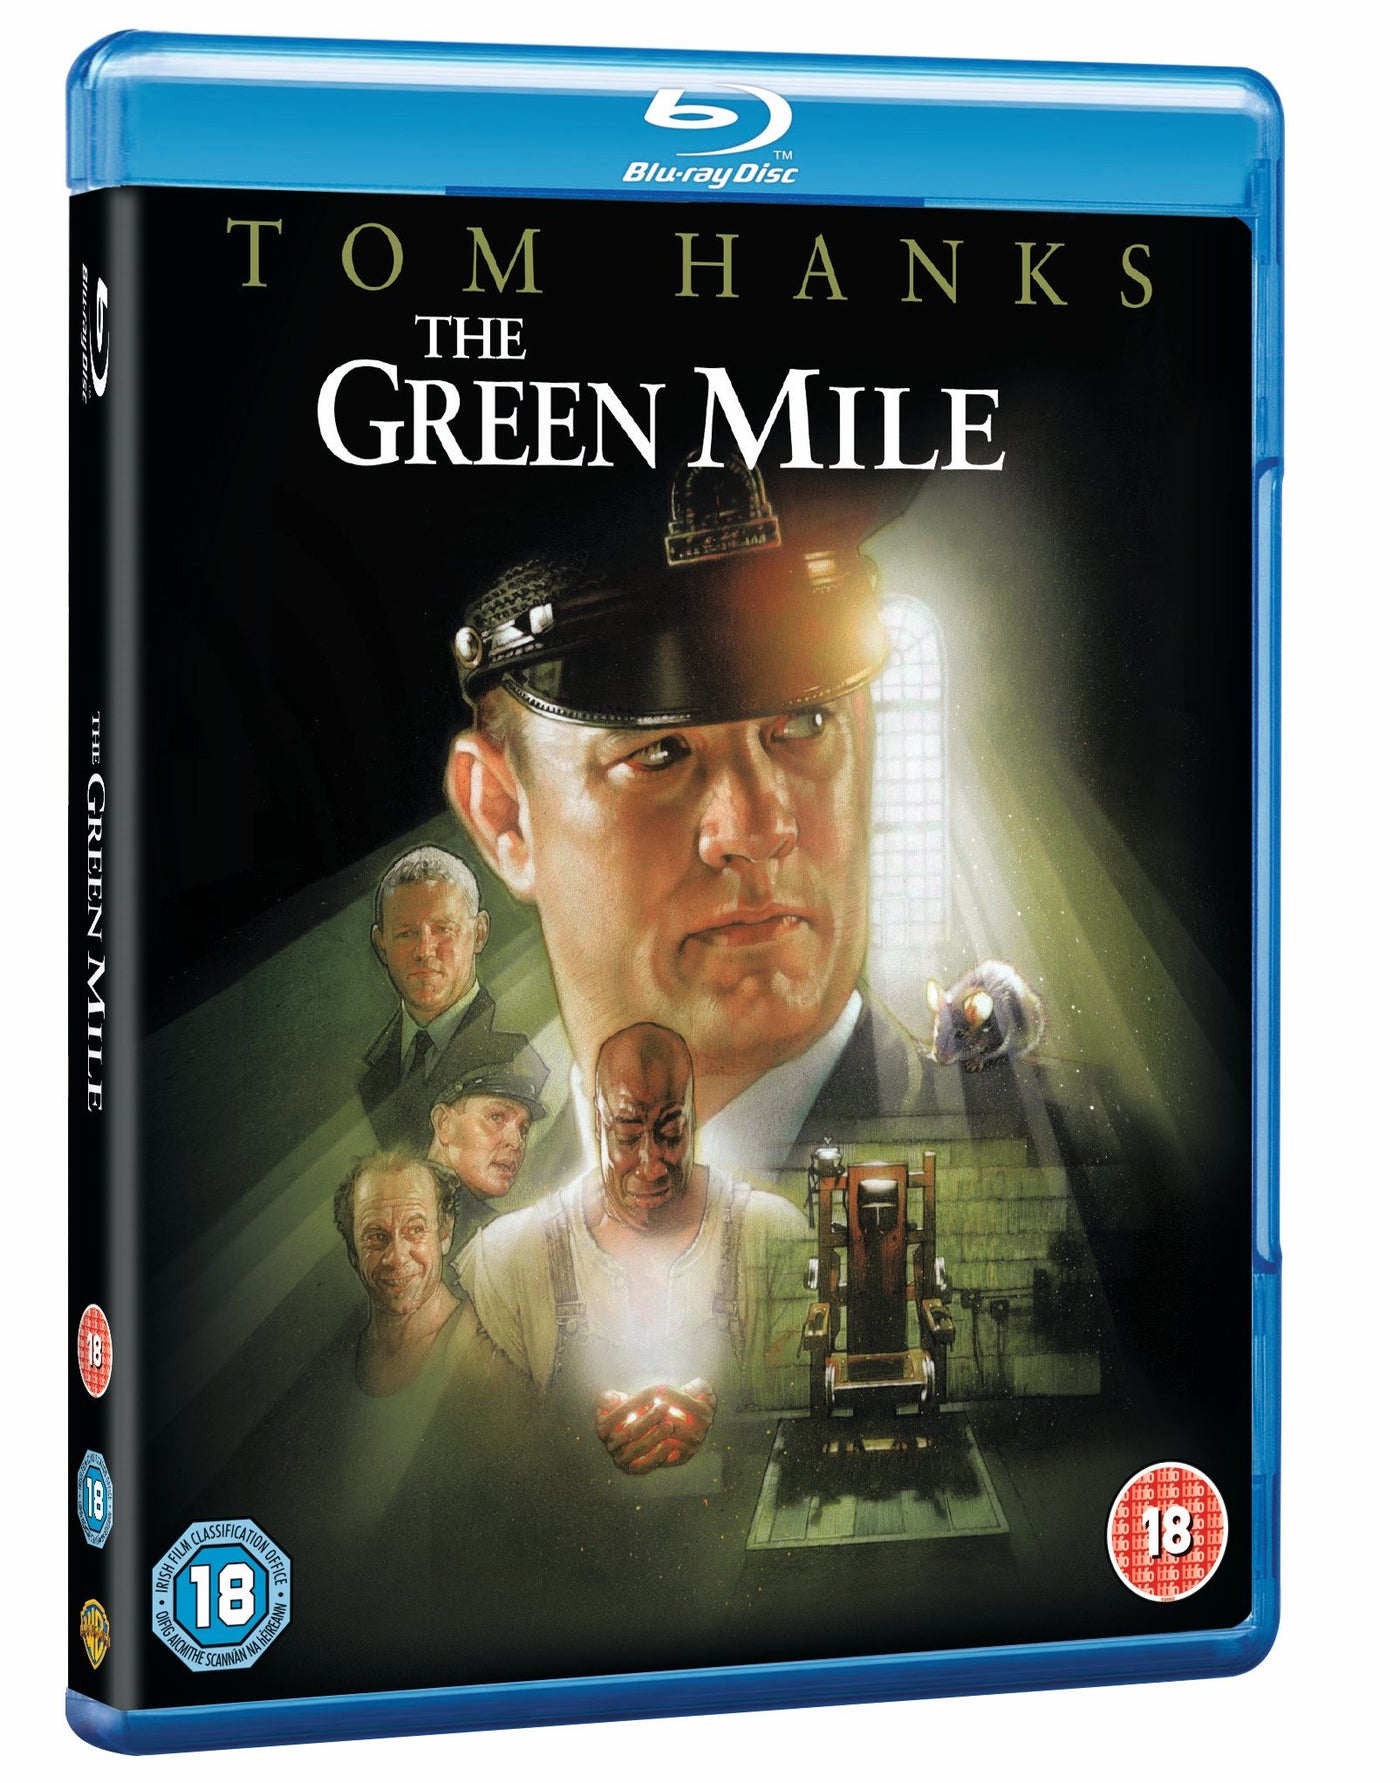 The Green Mile (Blu-ray)